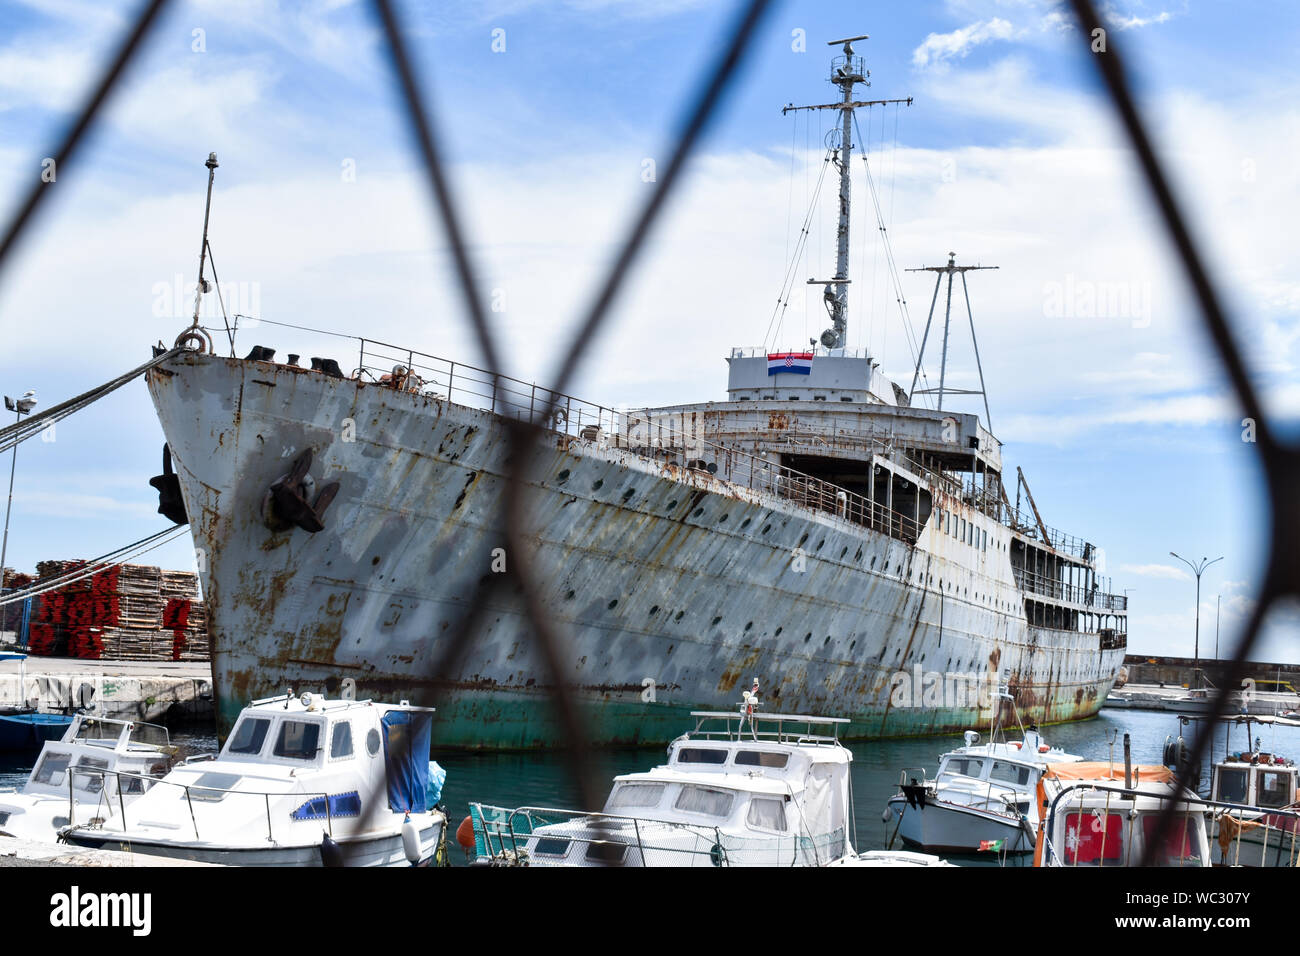 Abandoned rusty ship in Rijeka port, Croatia. Ship called Galeb previously owned by Josip Broz Tito, Yugoslav communist dictator. Stock Photo